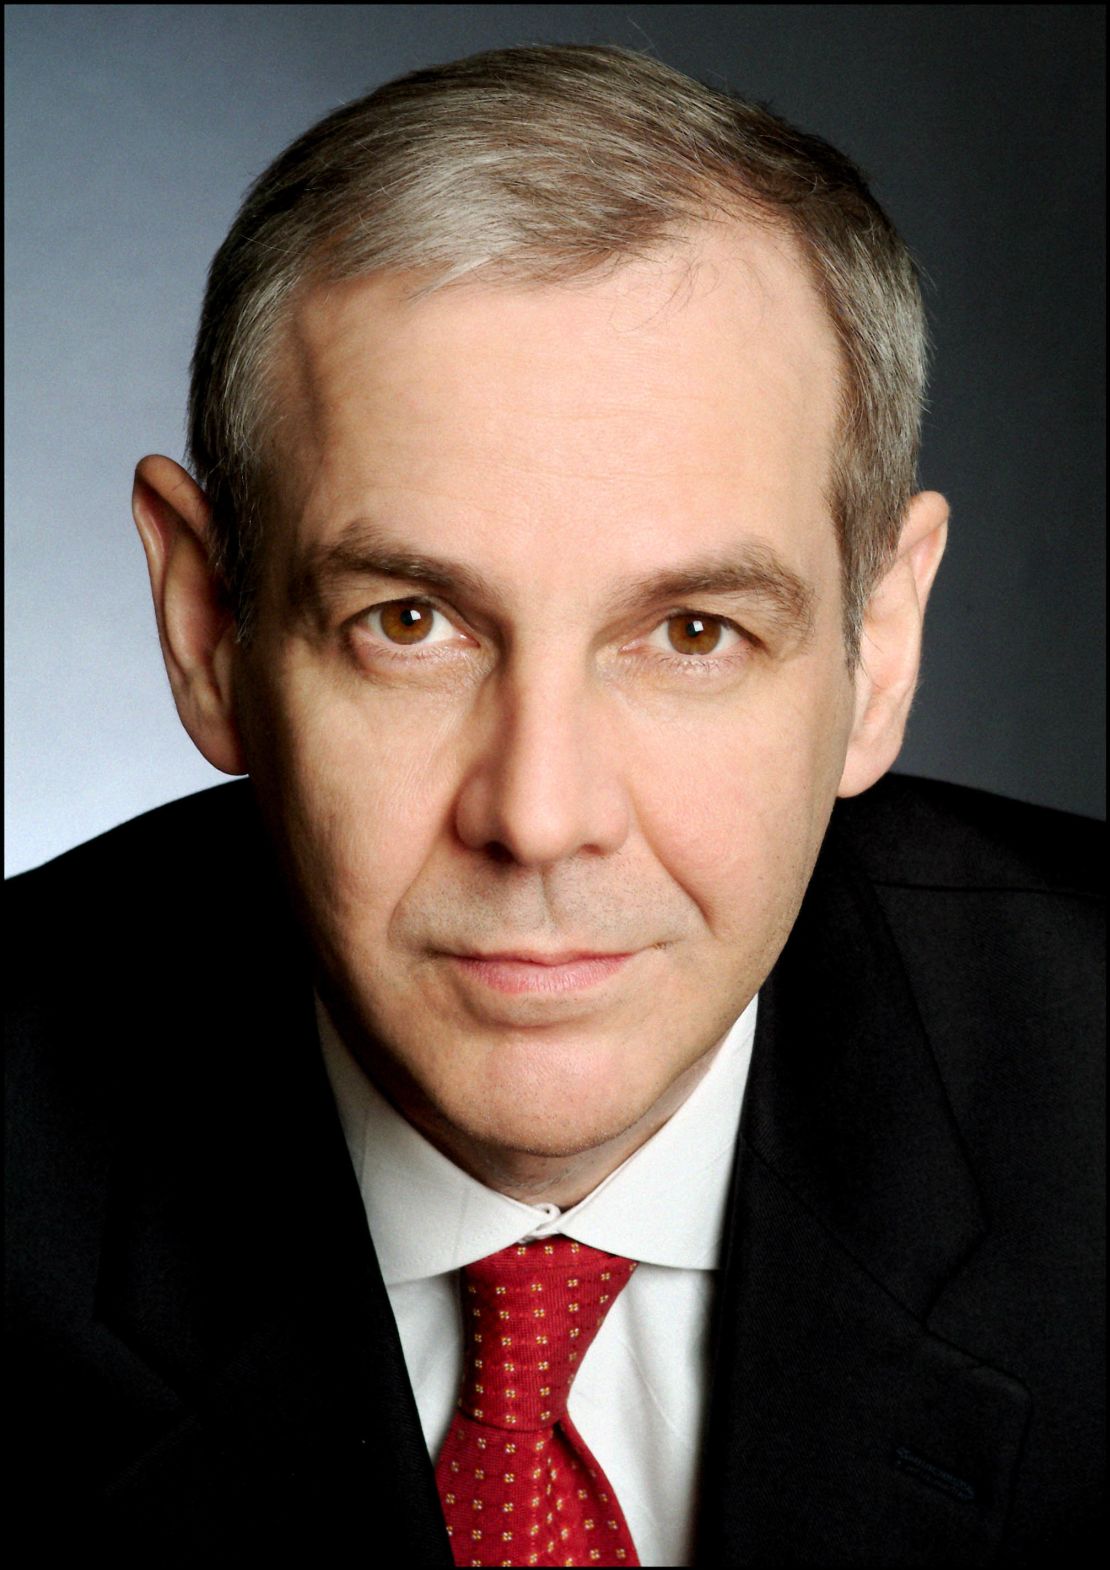 Brian Caplen, editor of The Banker magazine